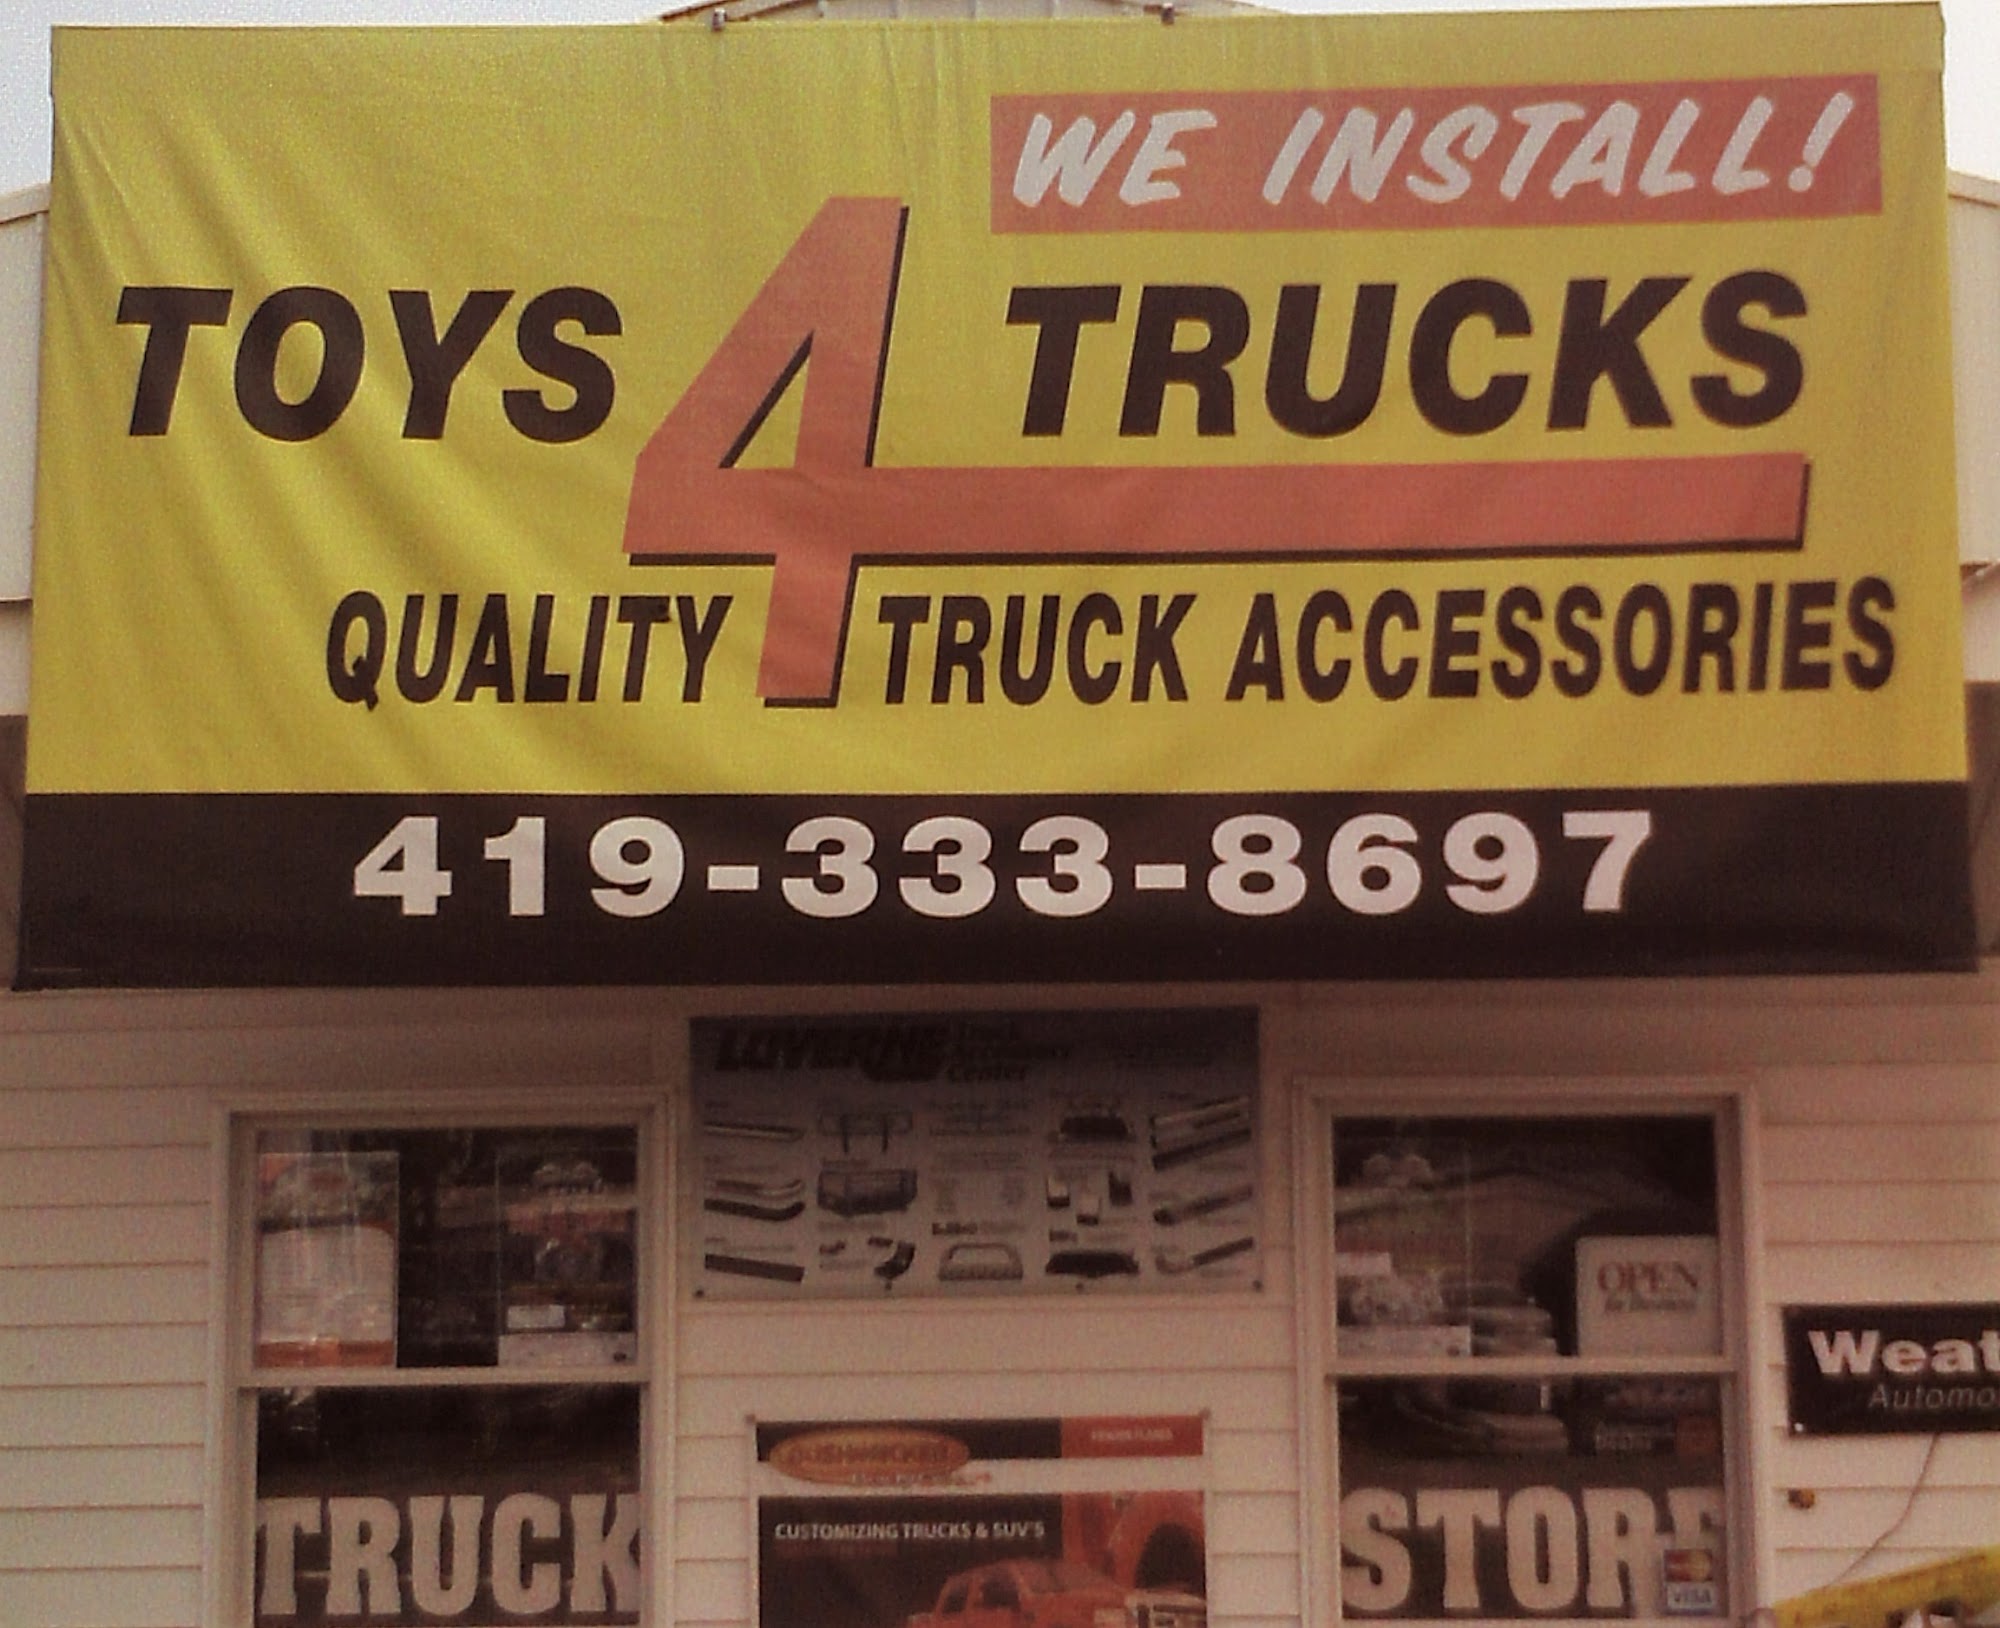 Toys 4 Trucks